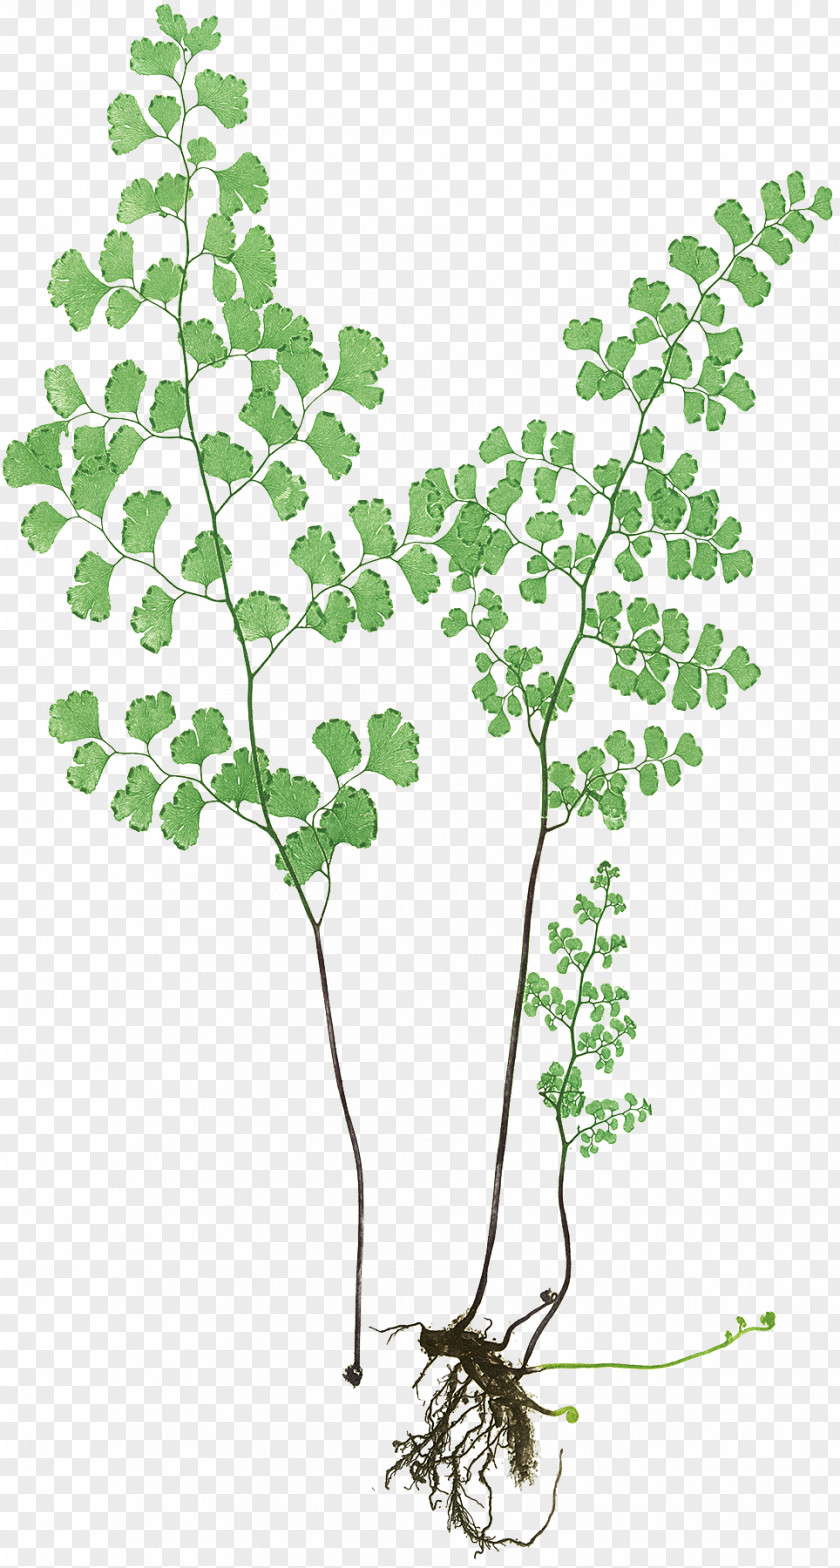 Leaf The Art Of Botanical Illustration Twig Adiantum Capillus-veneris PNG